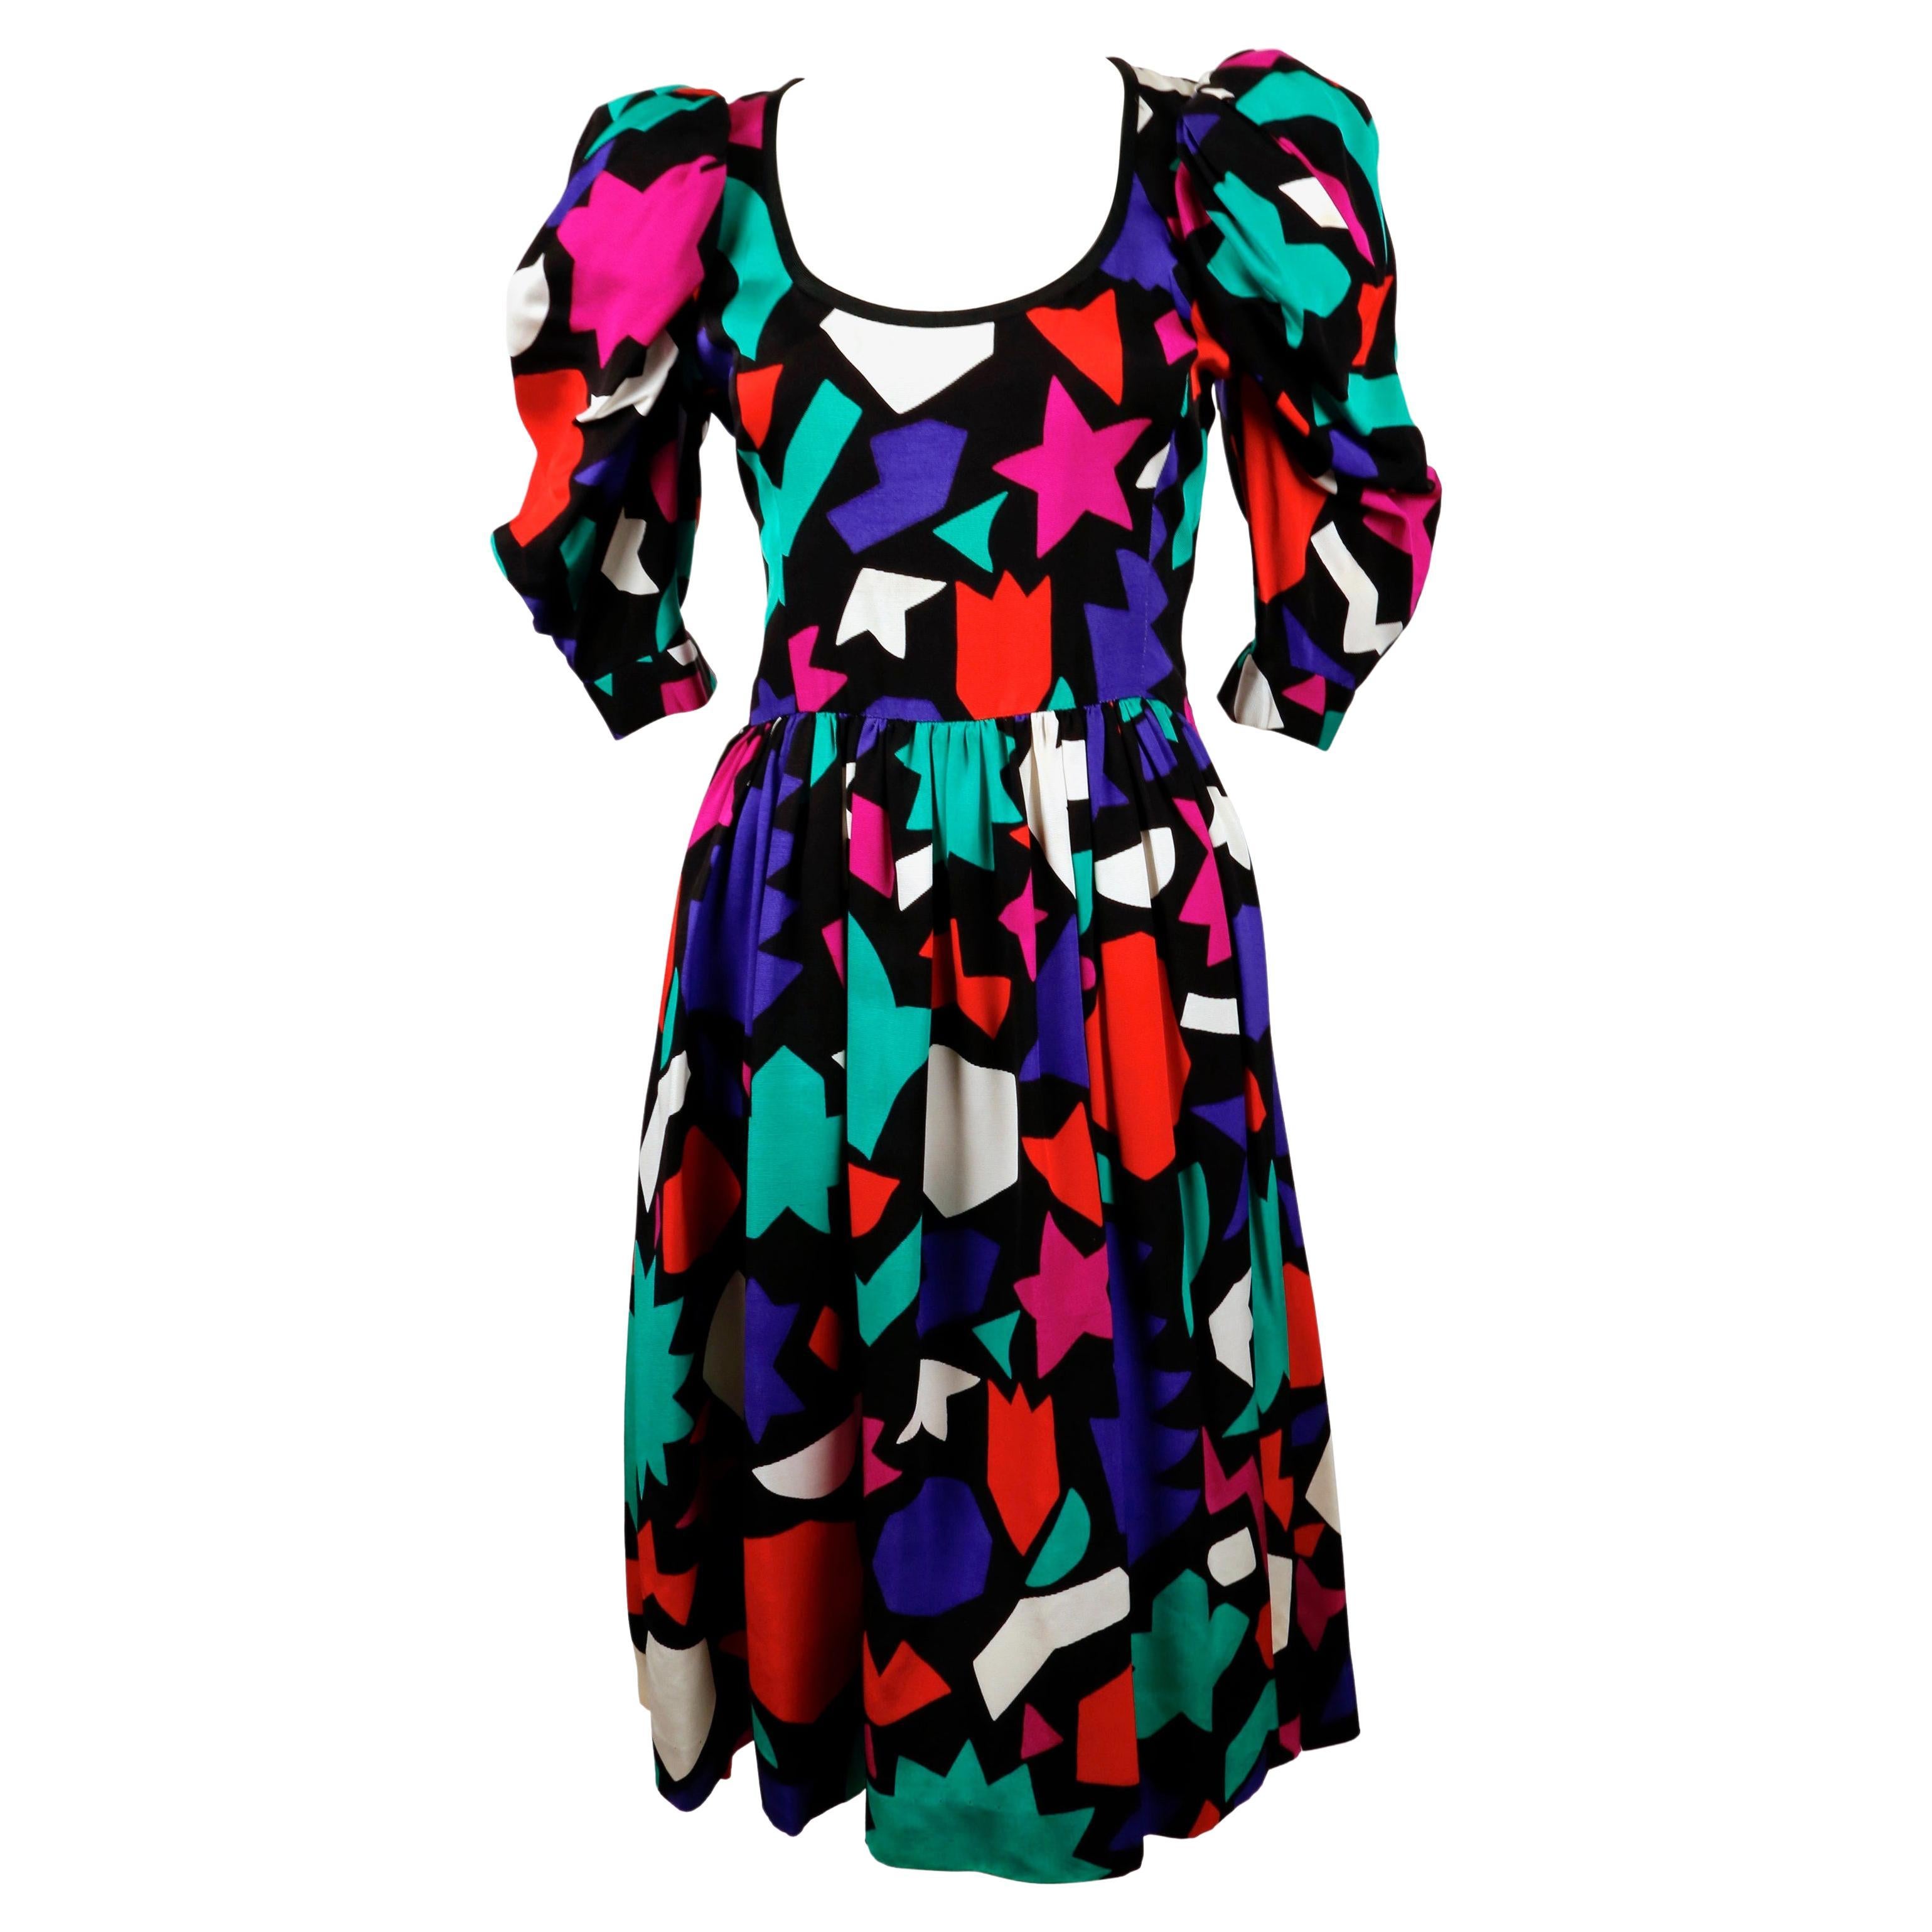 1983 YVES SAINT LAURENT "Hommage A Matisse" runway Dress 